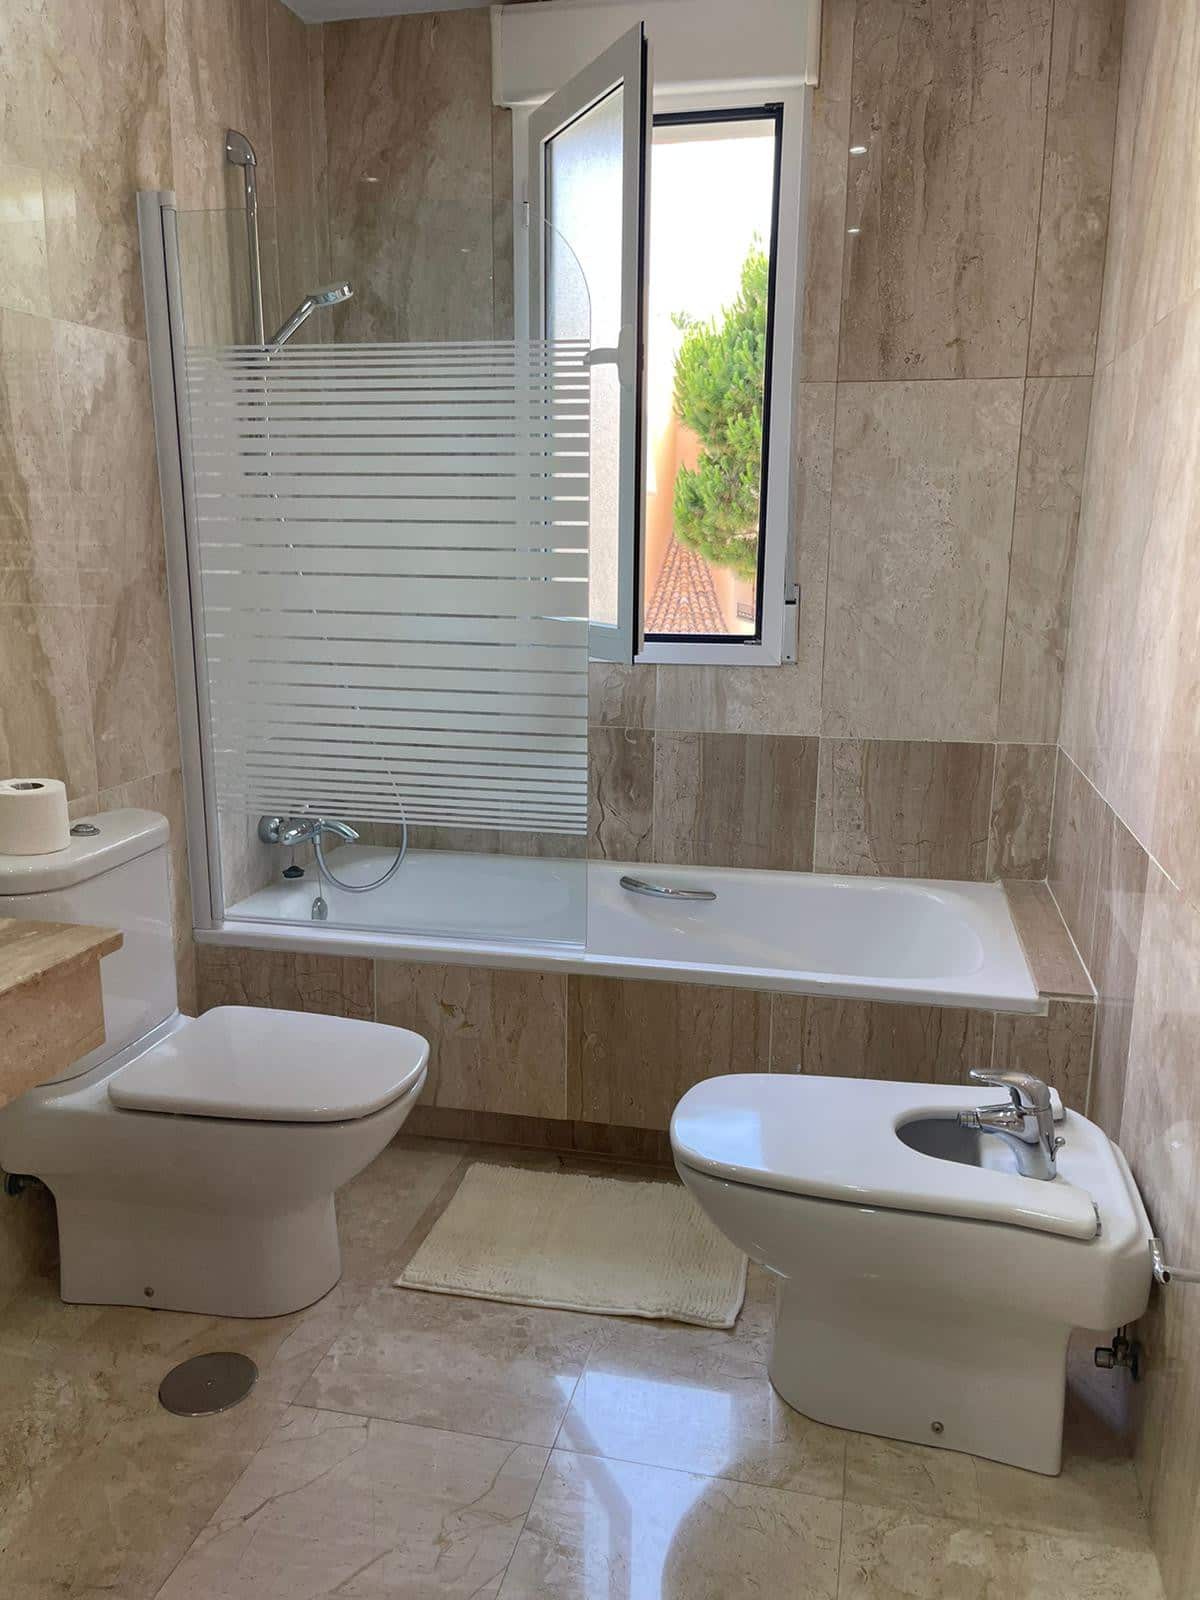 Oceano, Elviria, Malaga, Andalucia, Spain 29604, 2 Bedrooms Bedrooms, ,2 BathroomsBathrooms,Apartment/Flat,For Rent,Oceano,4,4142